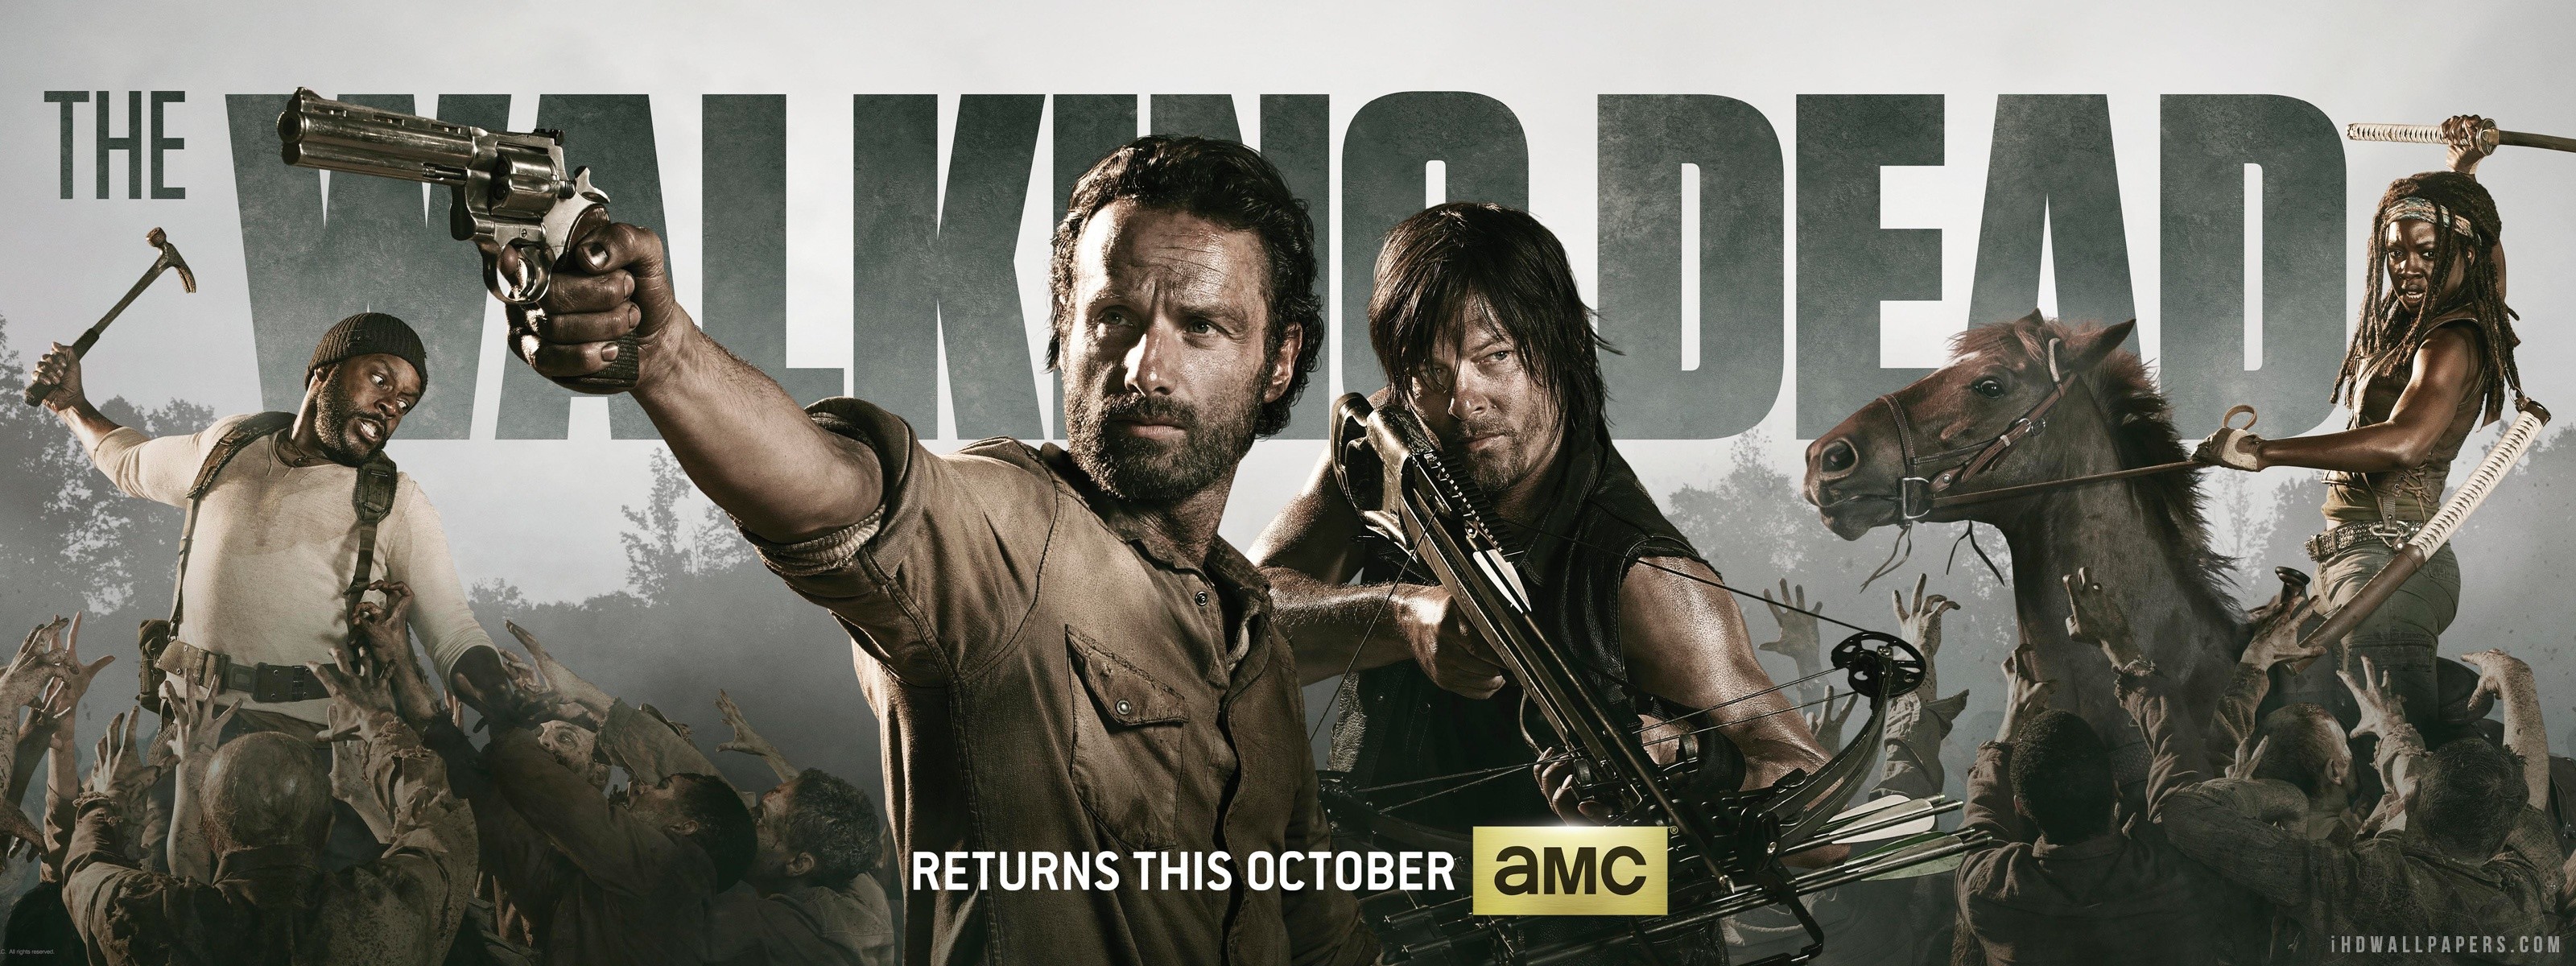 Wallpaper ID 658411  The Walking Dead Rick Grimes Andrew Lincoln  Season 8 1080P free download